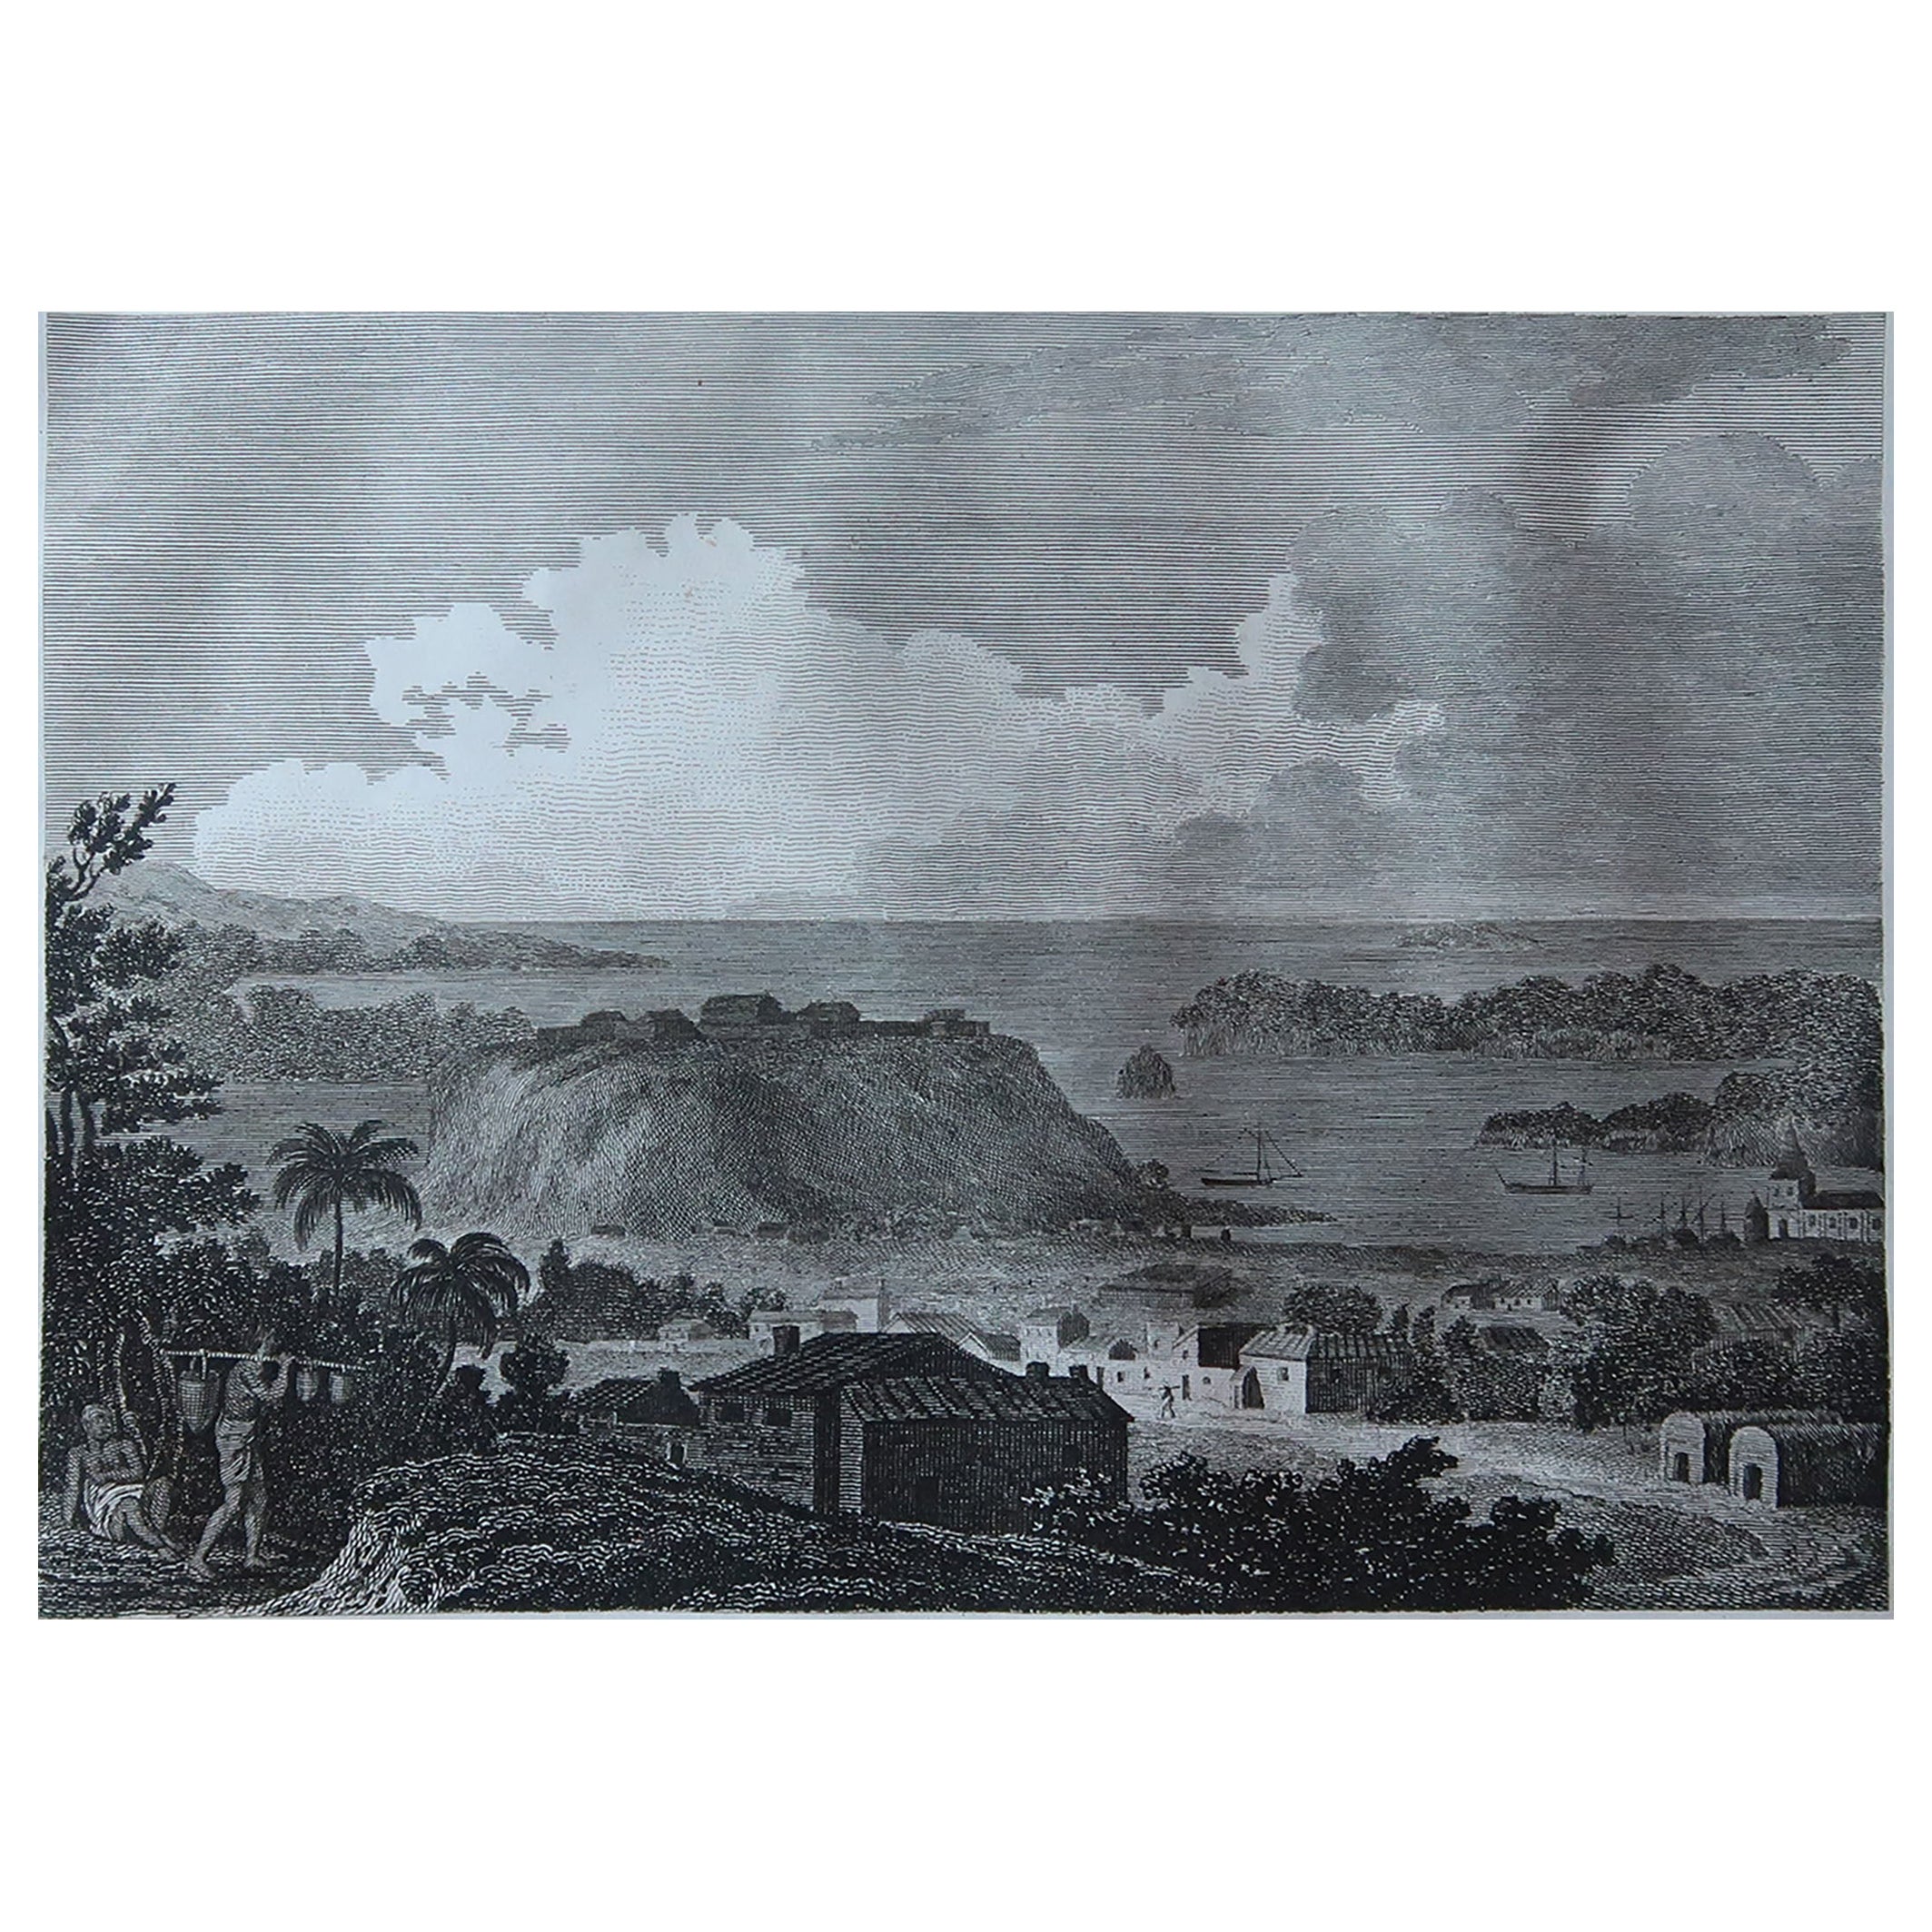 Original Antique Print of Acapulco, Mexico, Dated 1805